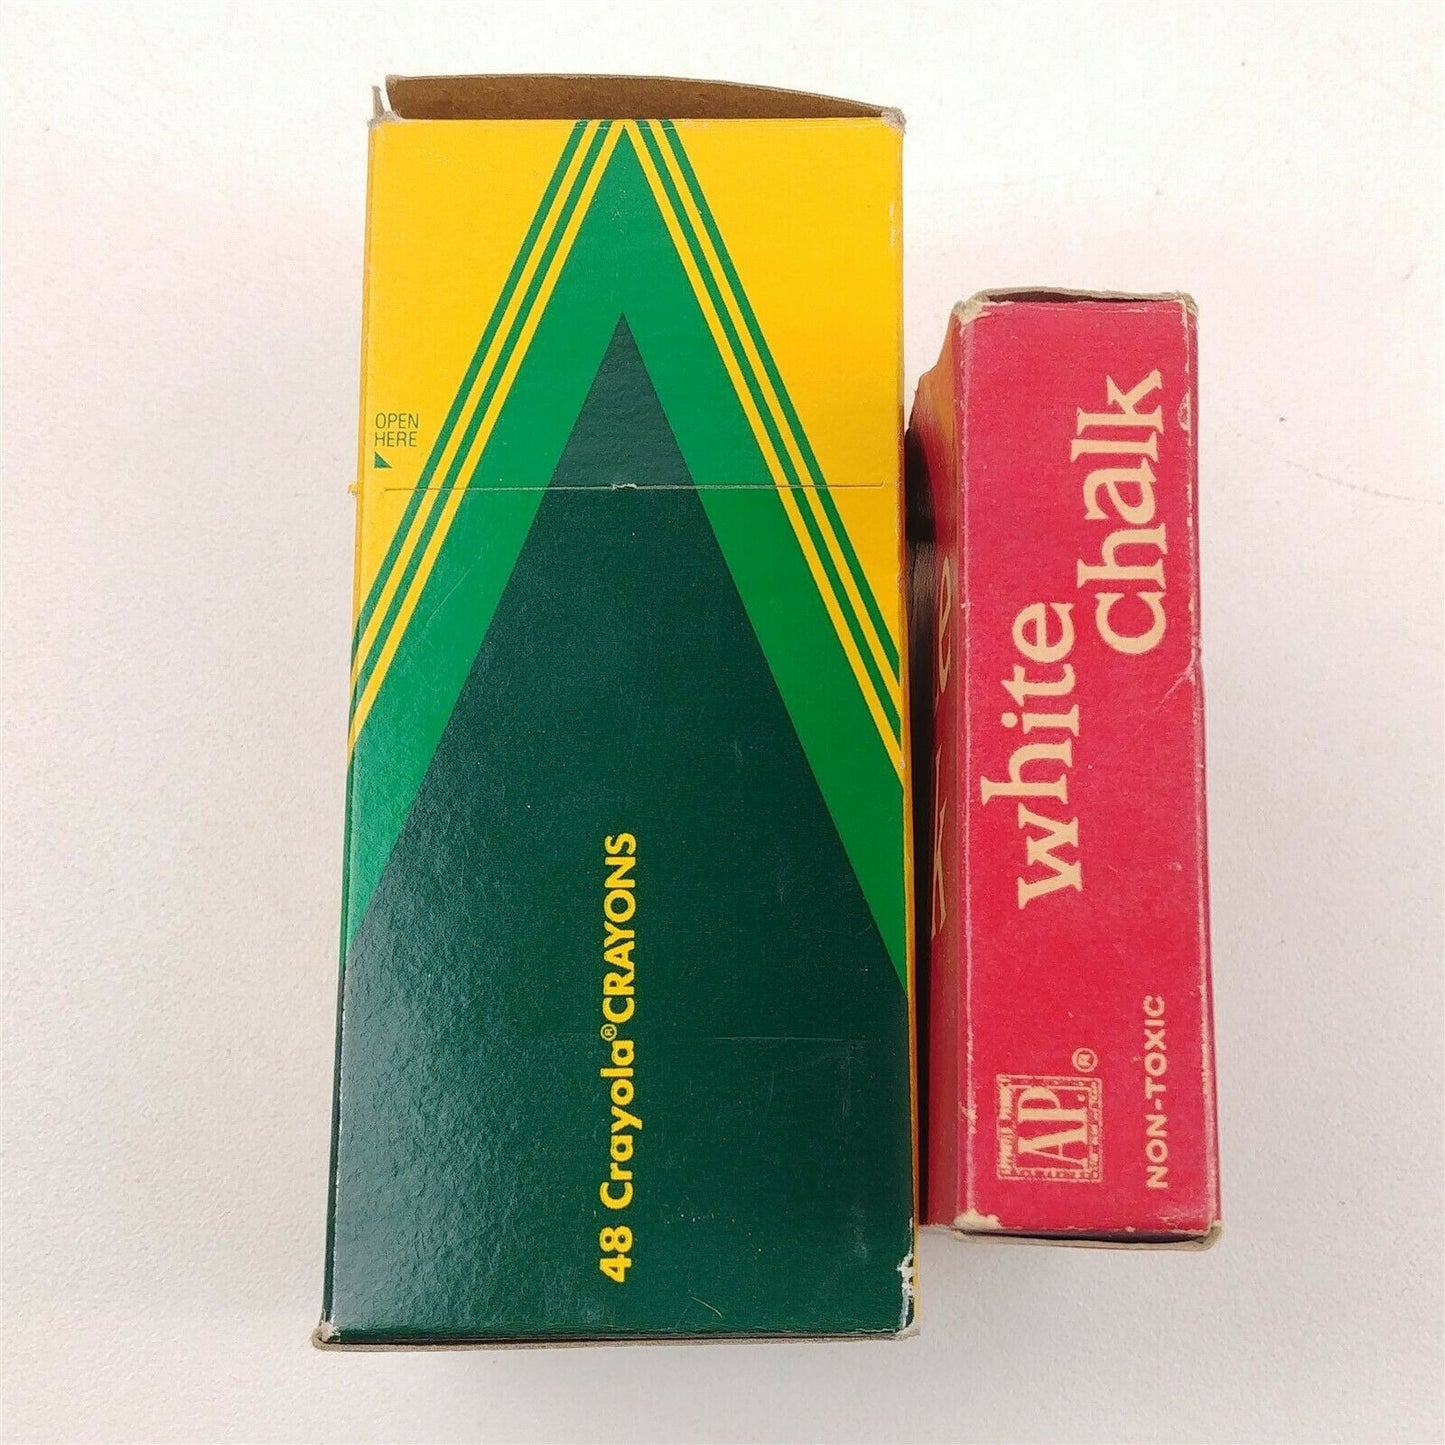 1988 48 Crayola Crayons 2 Missing - Binney & Smith White Chalk - Used